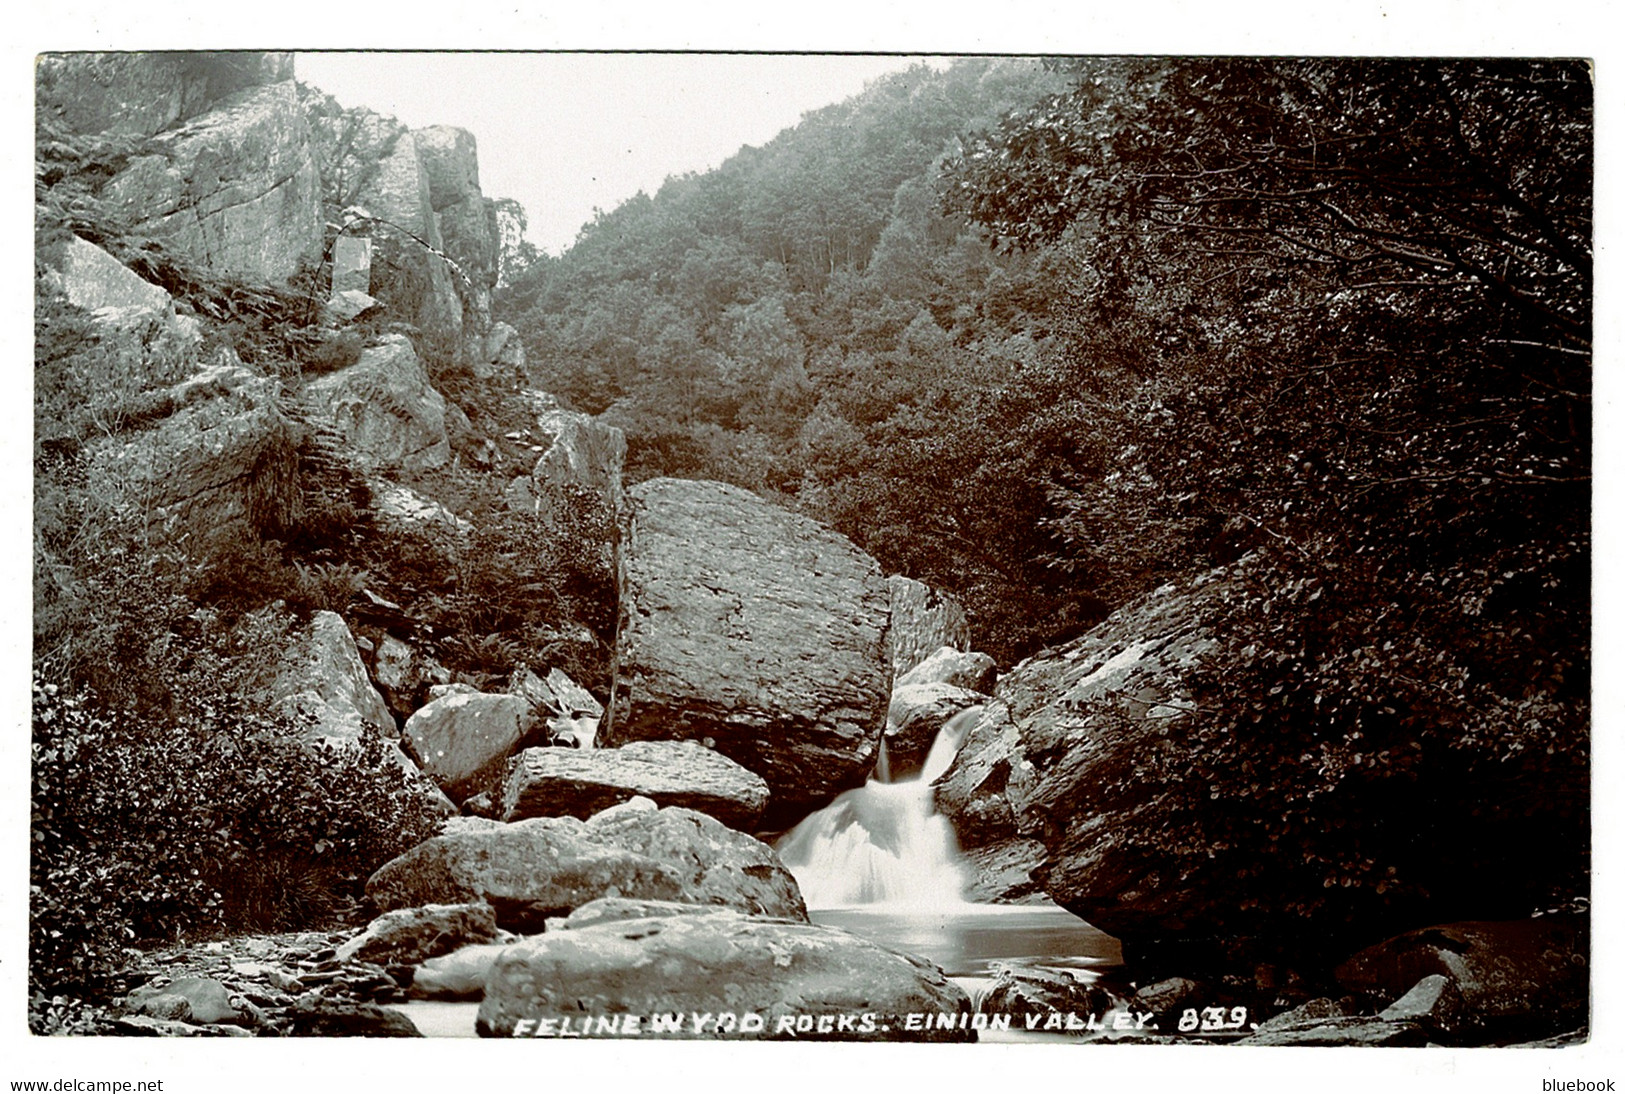 Ref 1402 - Early Real Photo Postcard - Feline Wydd Rocks - Einion Valley Wales - Zu Identifizieren